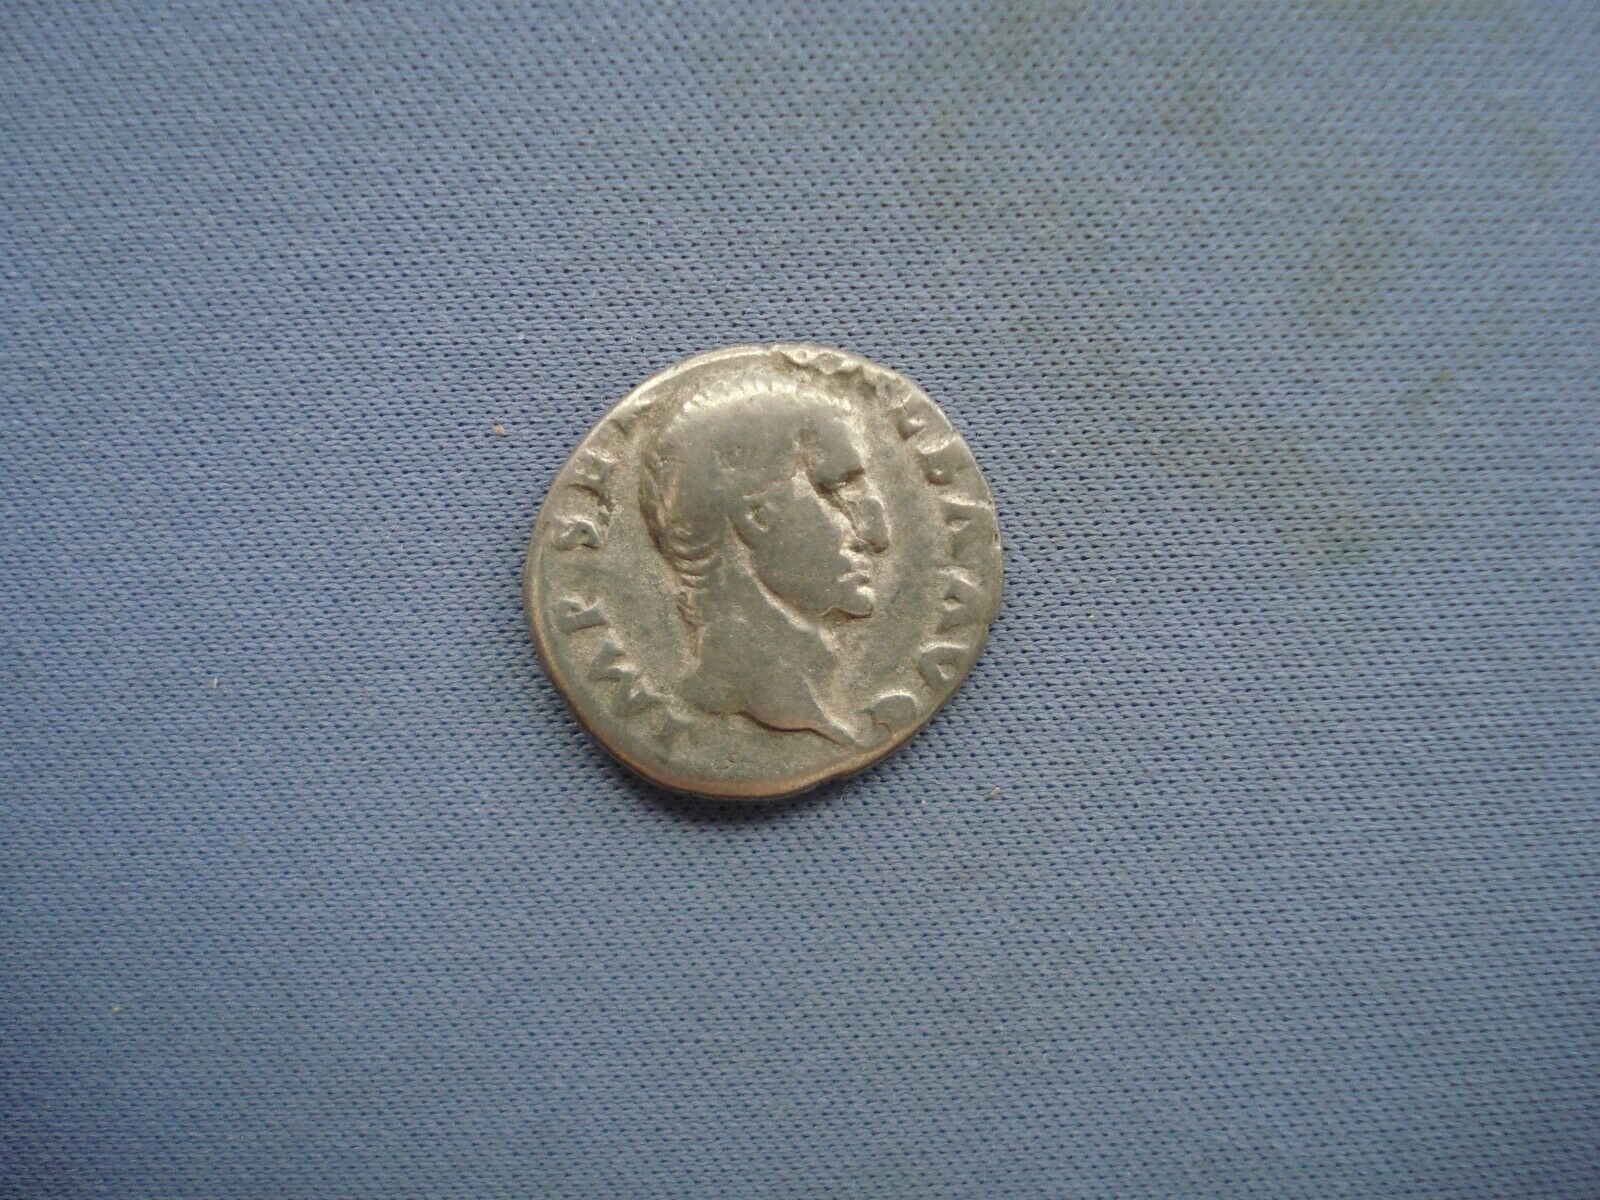 68-69 Ad Roman Republic - Galba - Ar Denarius - Oak Wreath - 2592